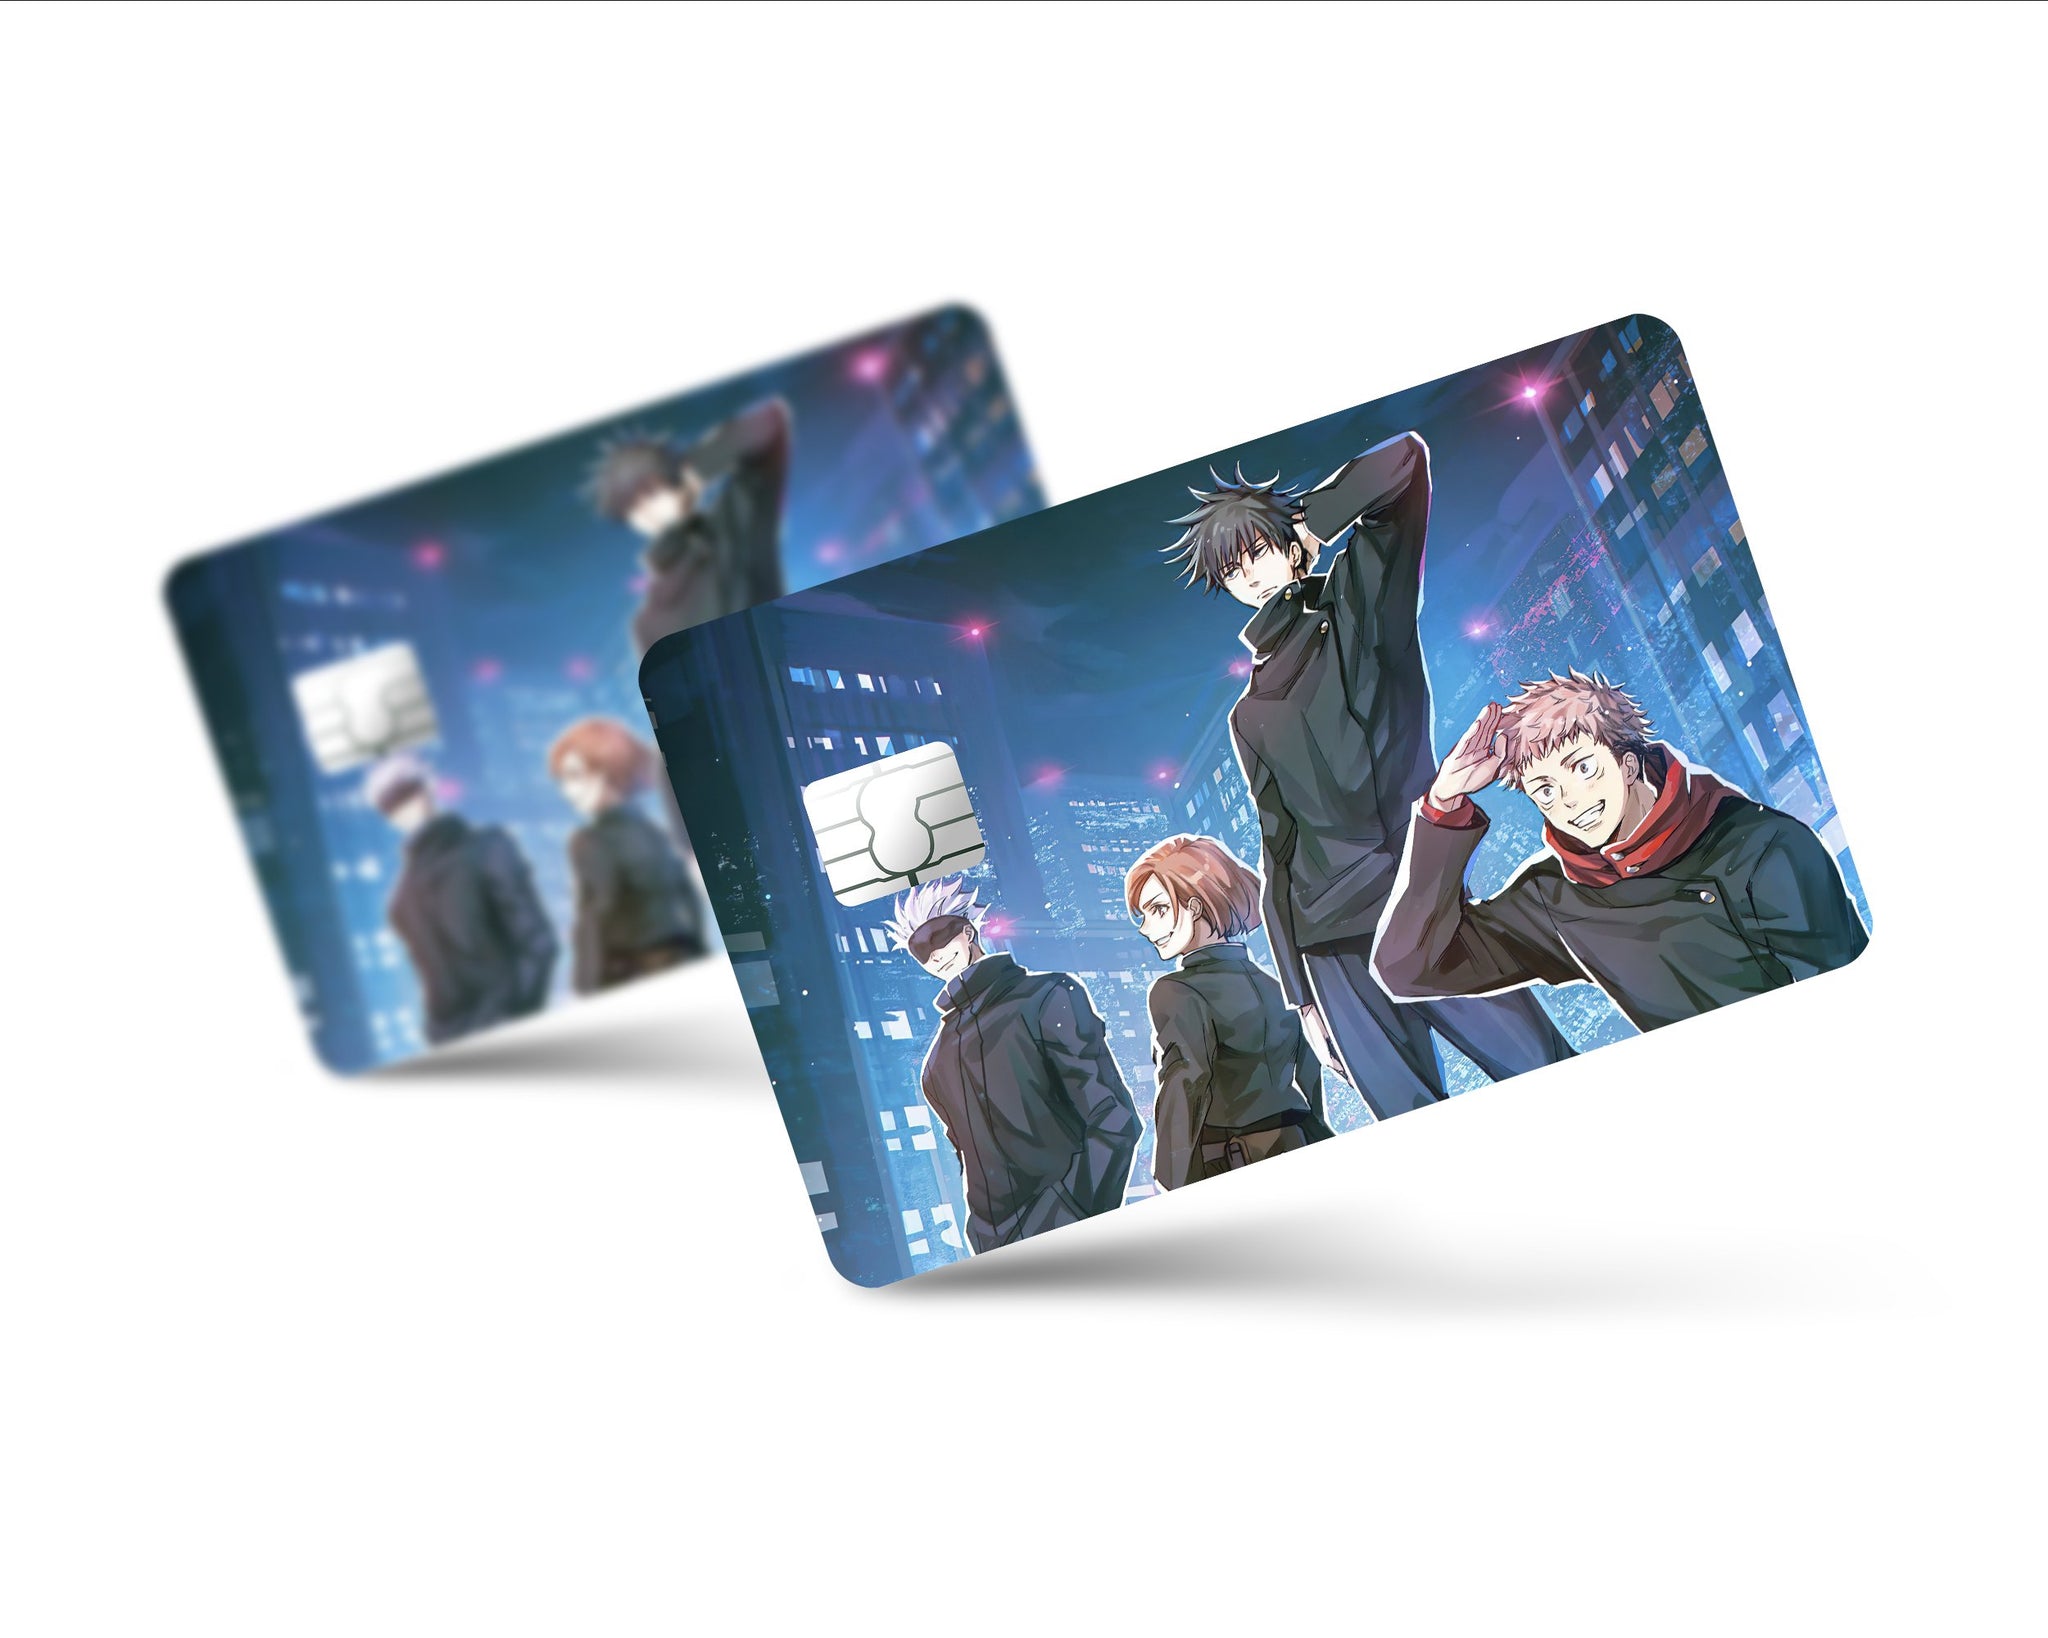 Anime Debit Card Skins : Amazon Com Debit Card Skin - Custom credit